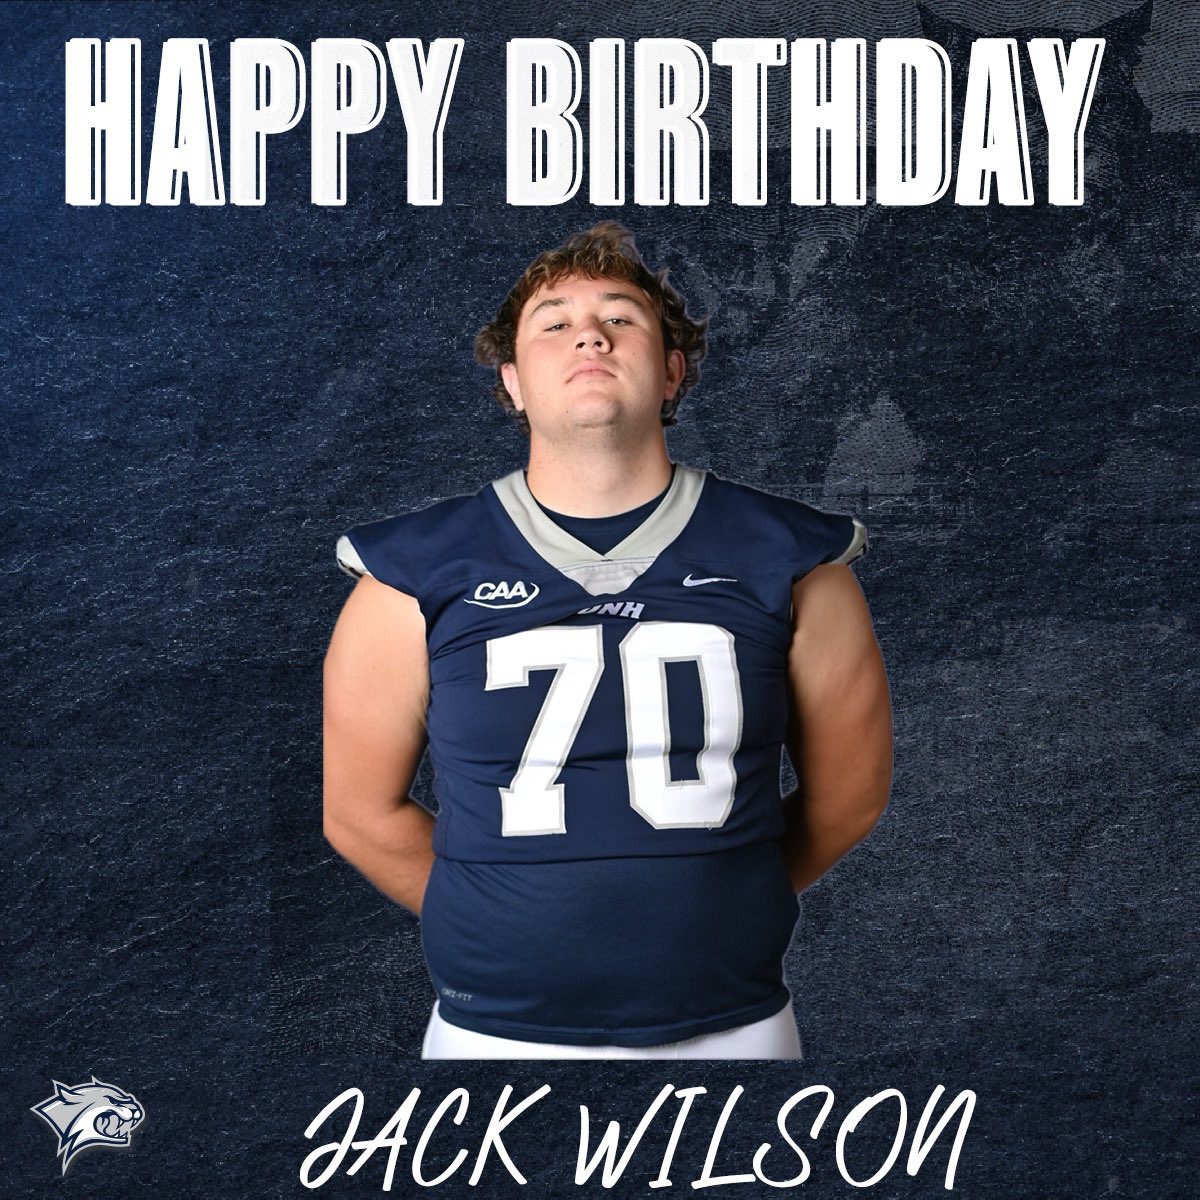 Happy birthday @Jack_Wilson68